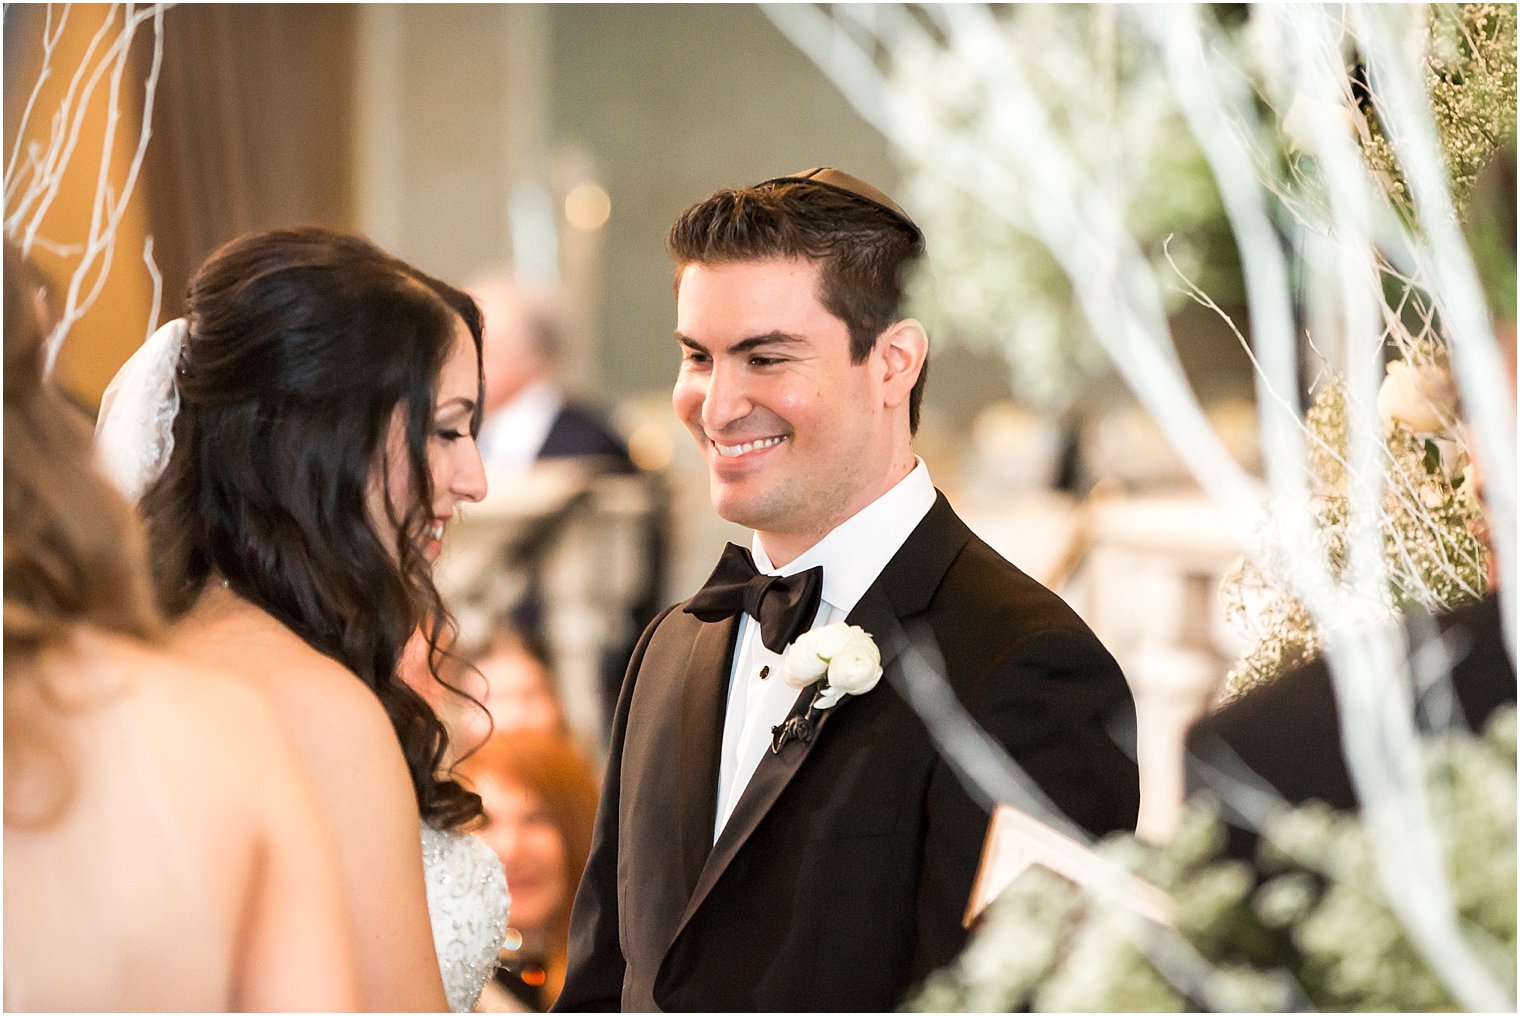 Groom admiring his bride during wedding ceremony | Photo by Idalia Photography